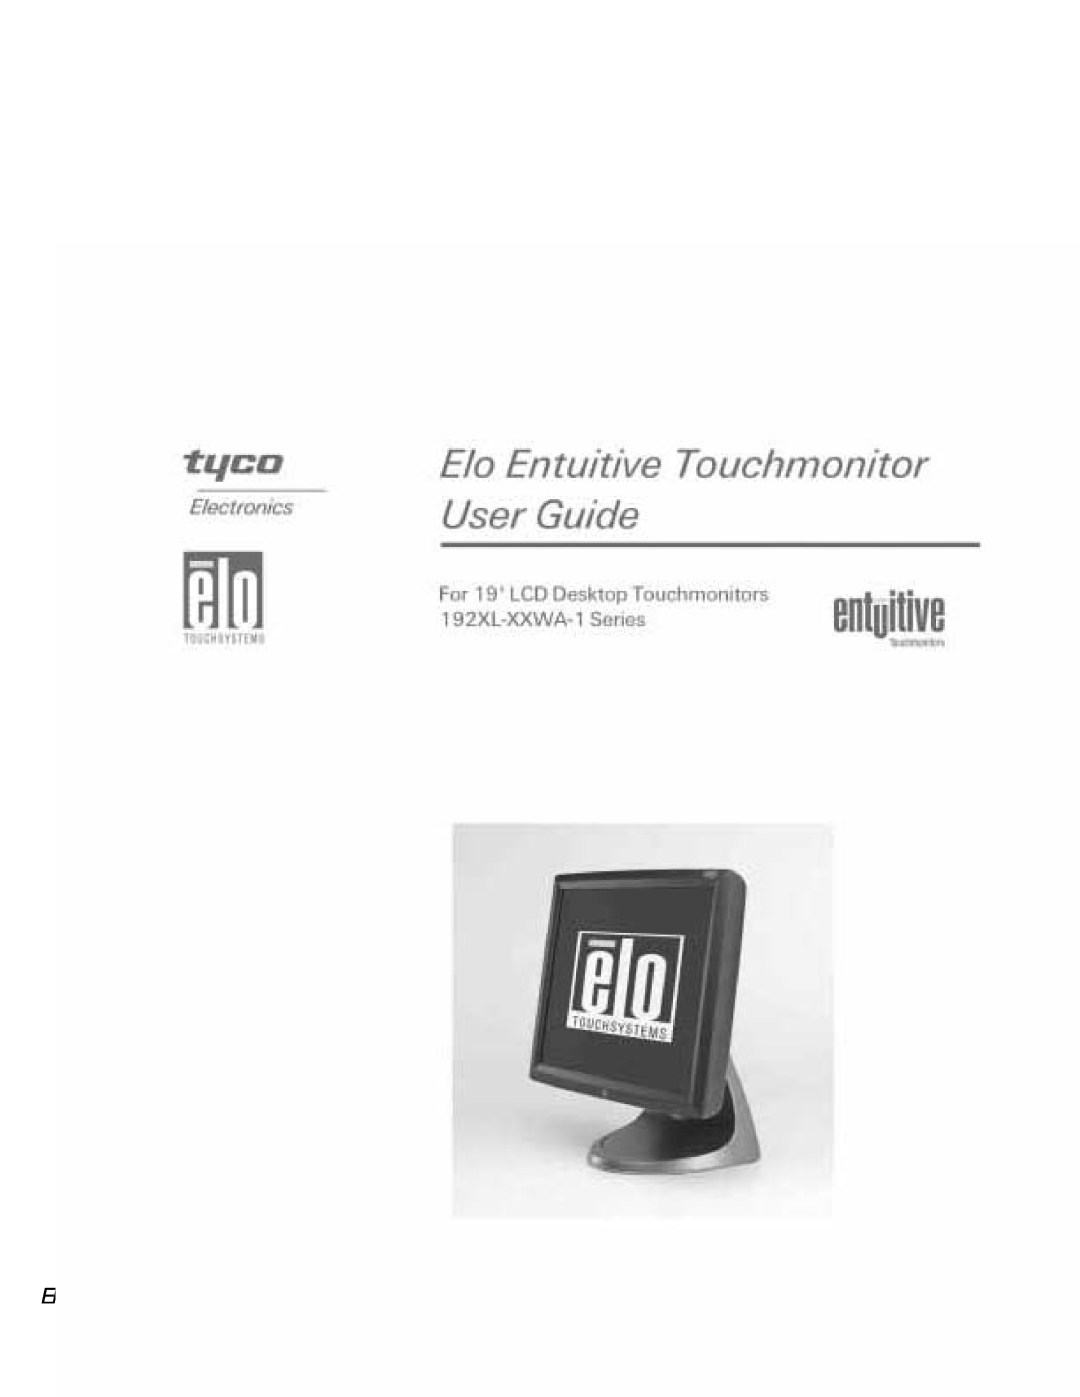 Elo TouchSystems 192XL-XXWA-1 Series manual Elo Entuitive Touchmonitor User Guide 